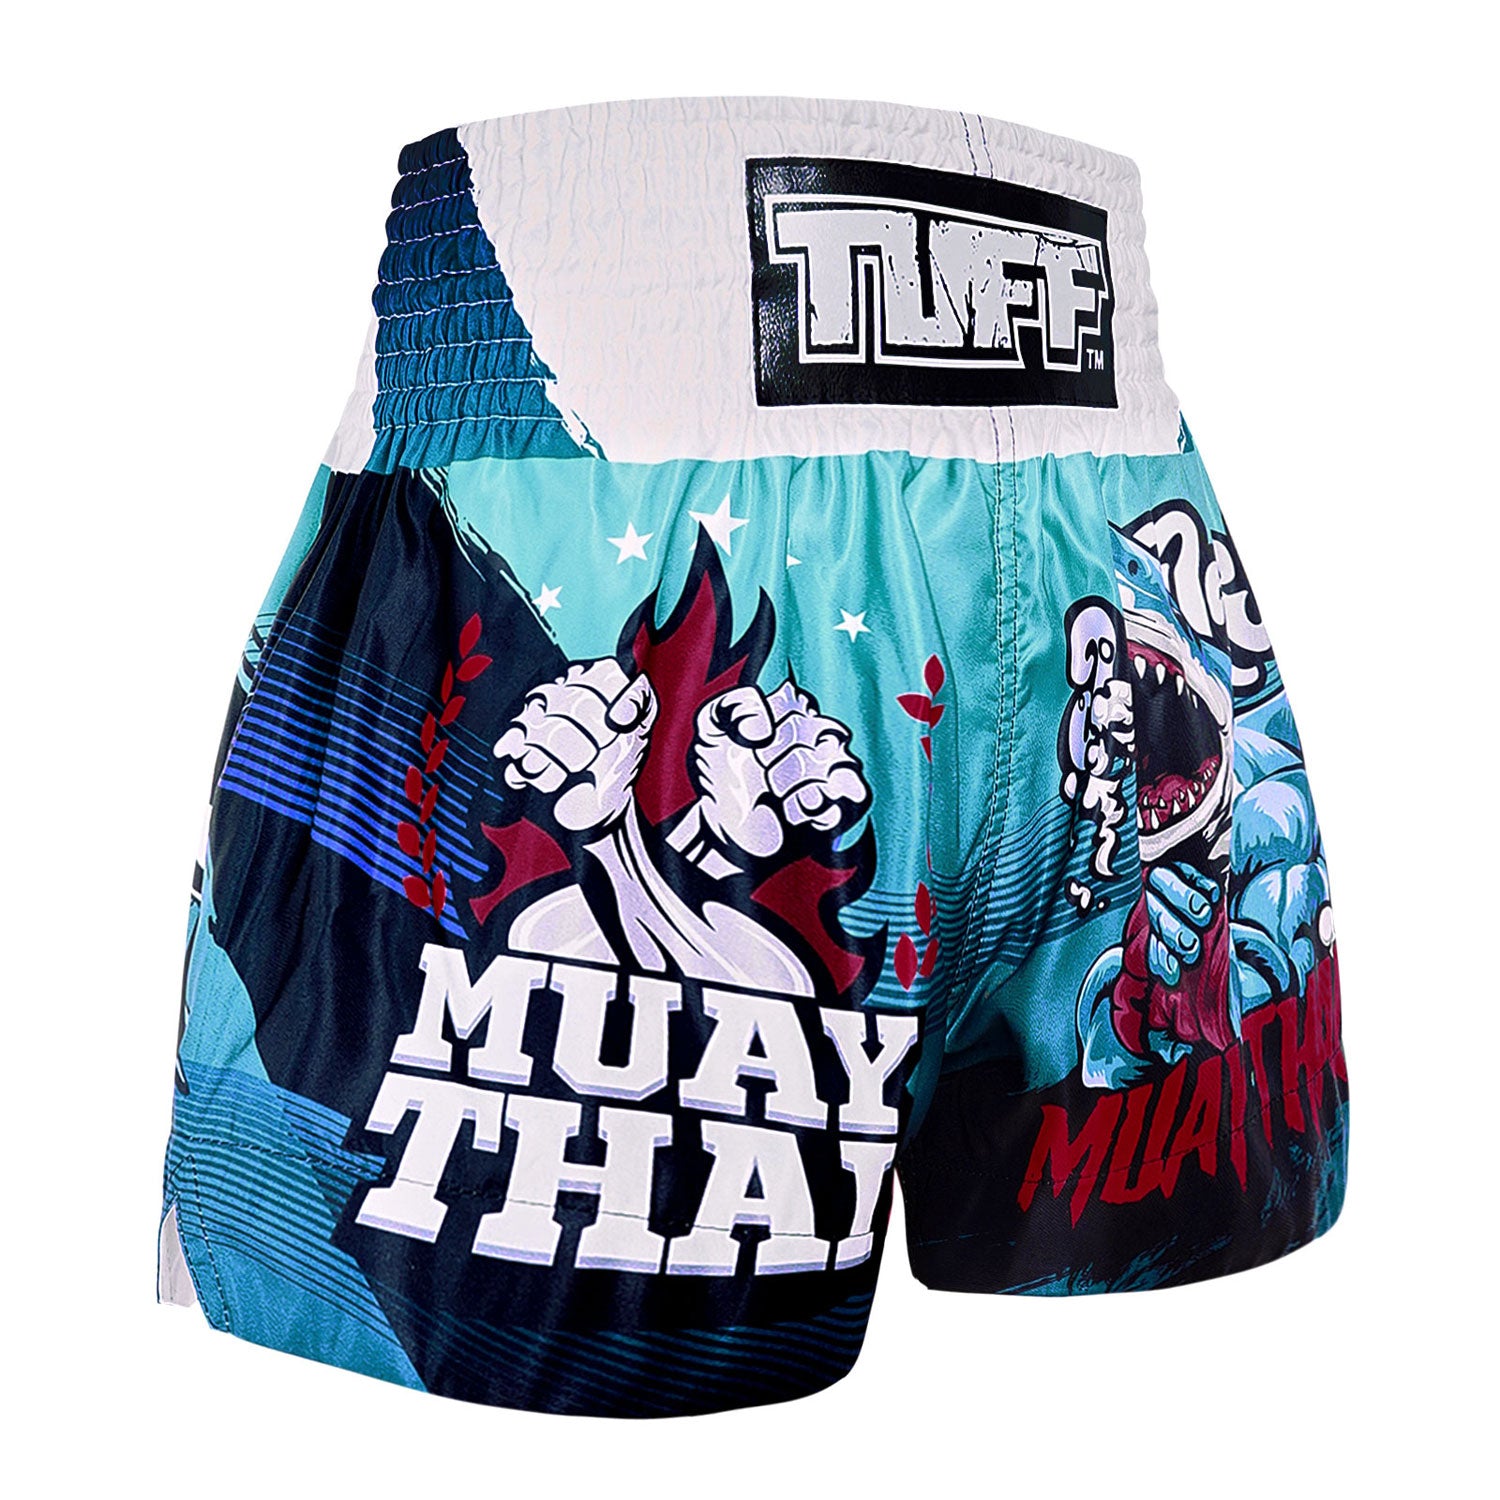 MS673 TUFF Muay Thai Shorts The Carcharodon